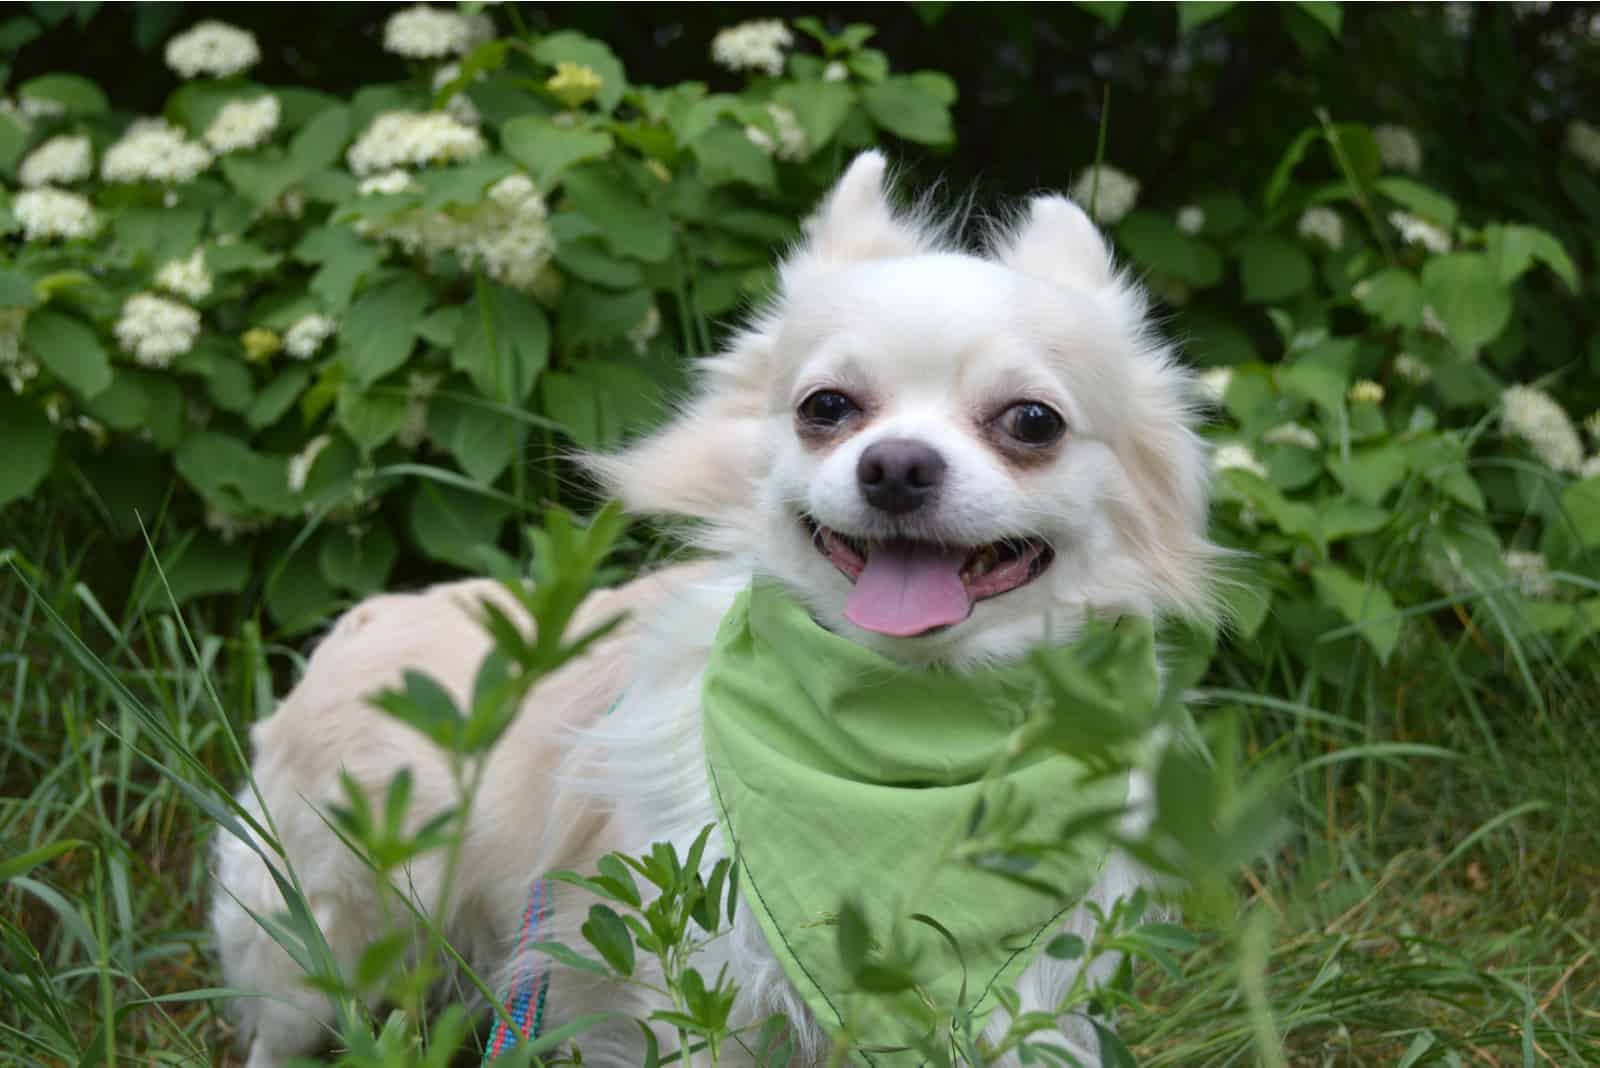 long-haired Chihuahua dog with a green bandana